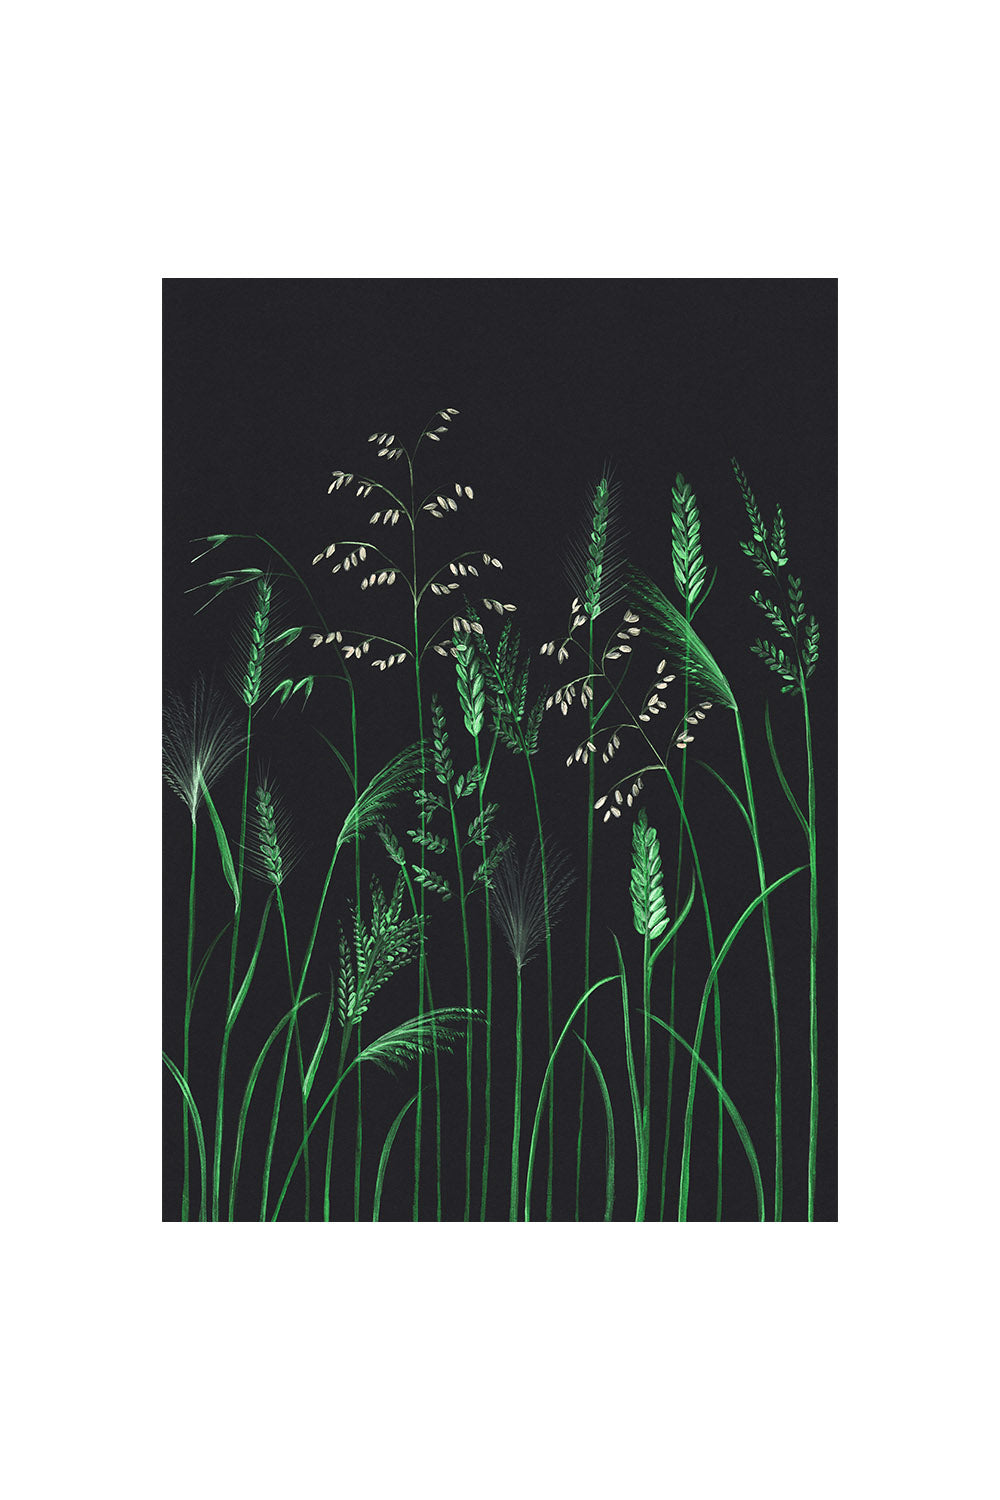 RHS CHELSEA FLOWER SHOW GRASSES | CARD BY STENGUN DRAWINGS